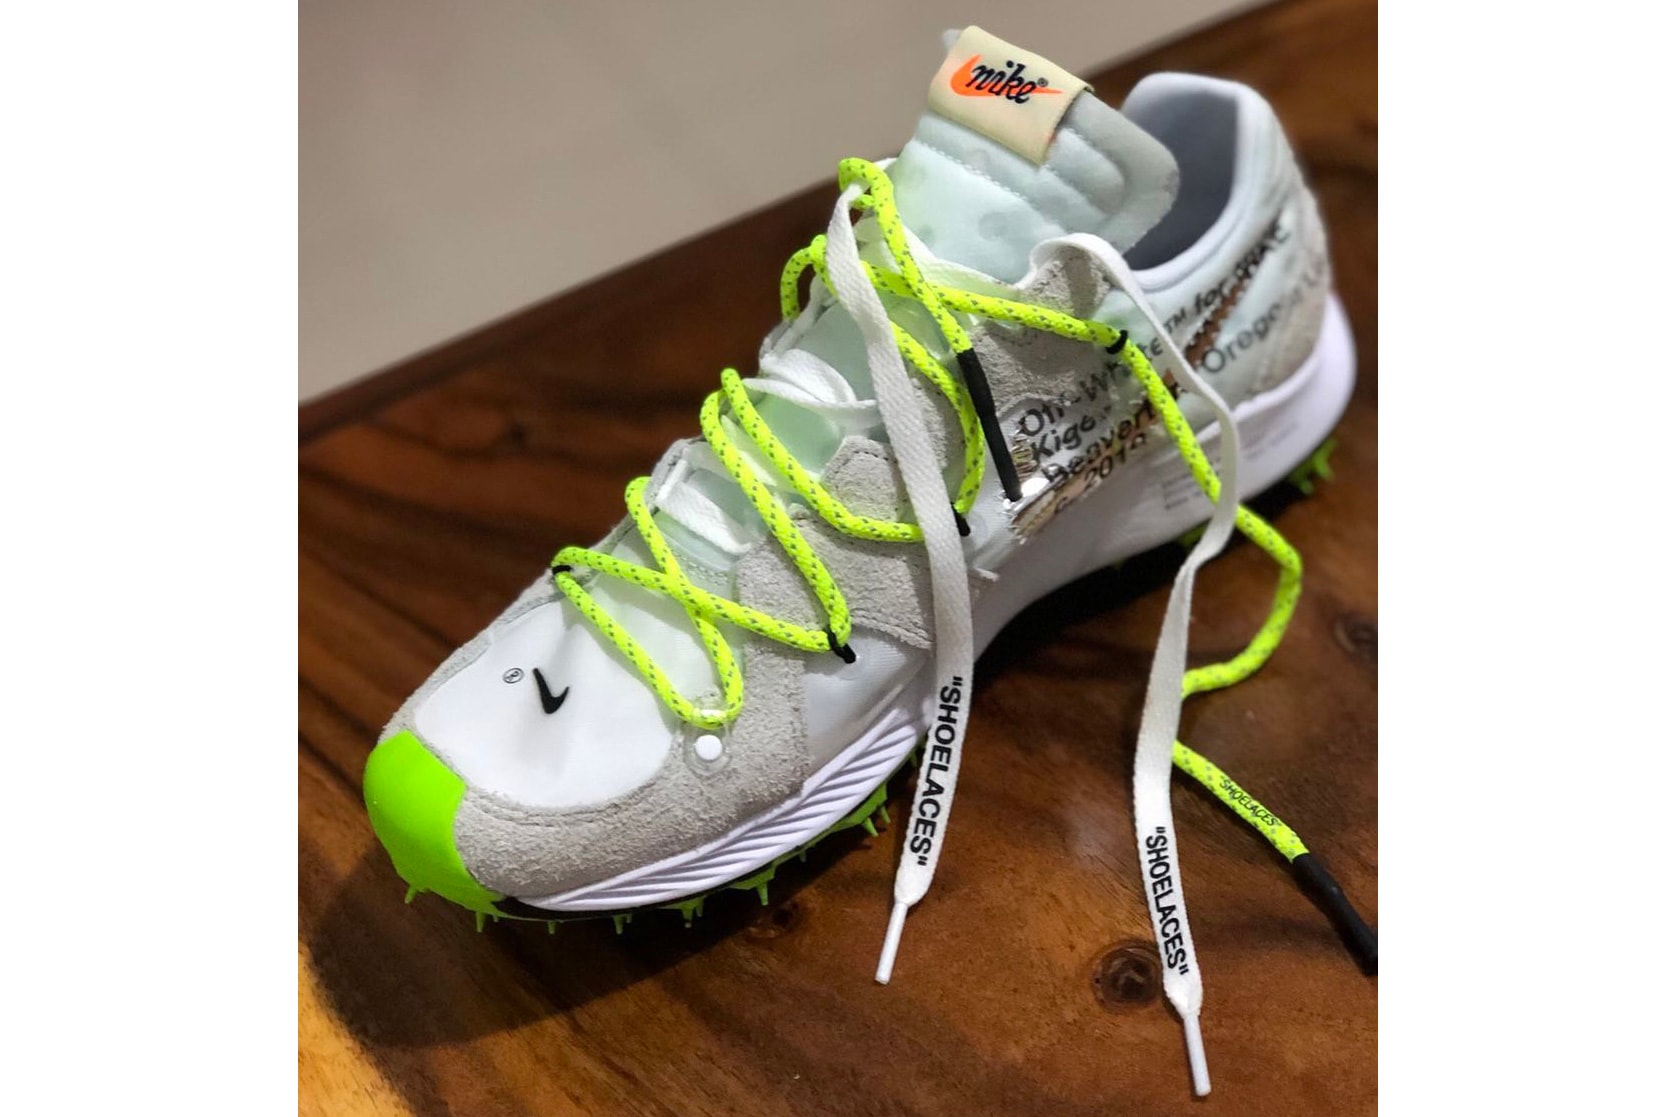 Off-White™ x Nike 2019 Sneakers, Better Look Virgil Abloh Coachella white grey glow in the dark neon green yellow swoosh